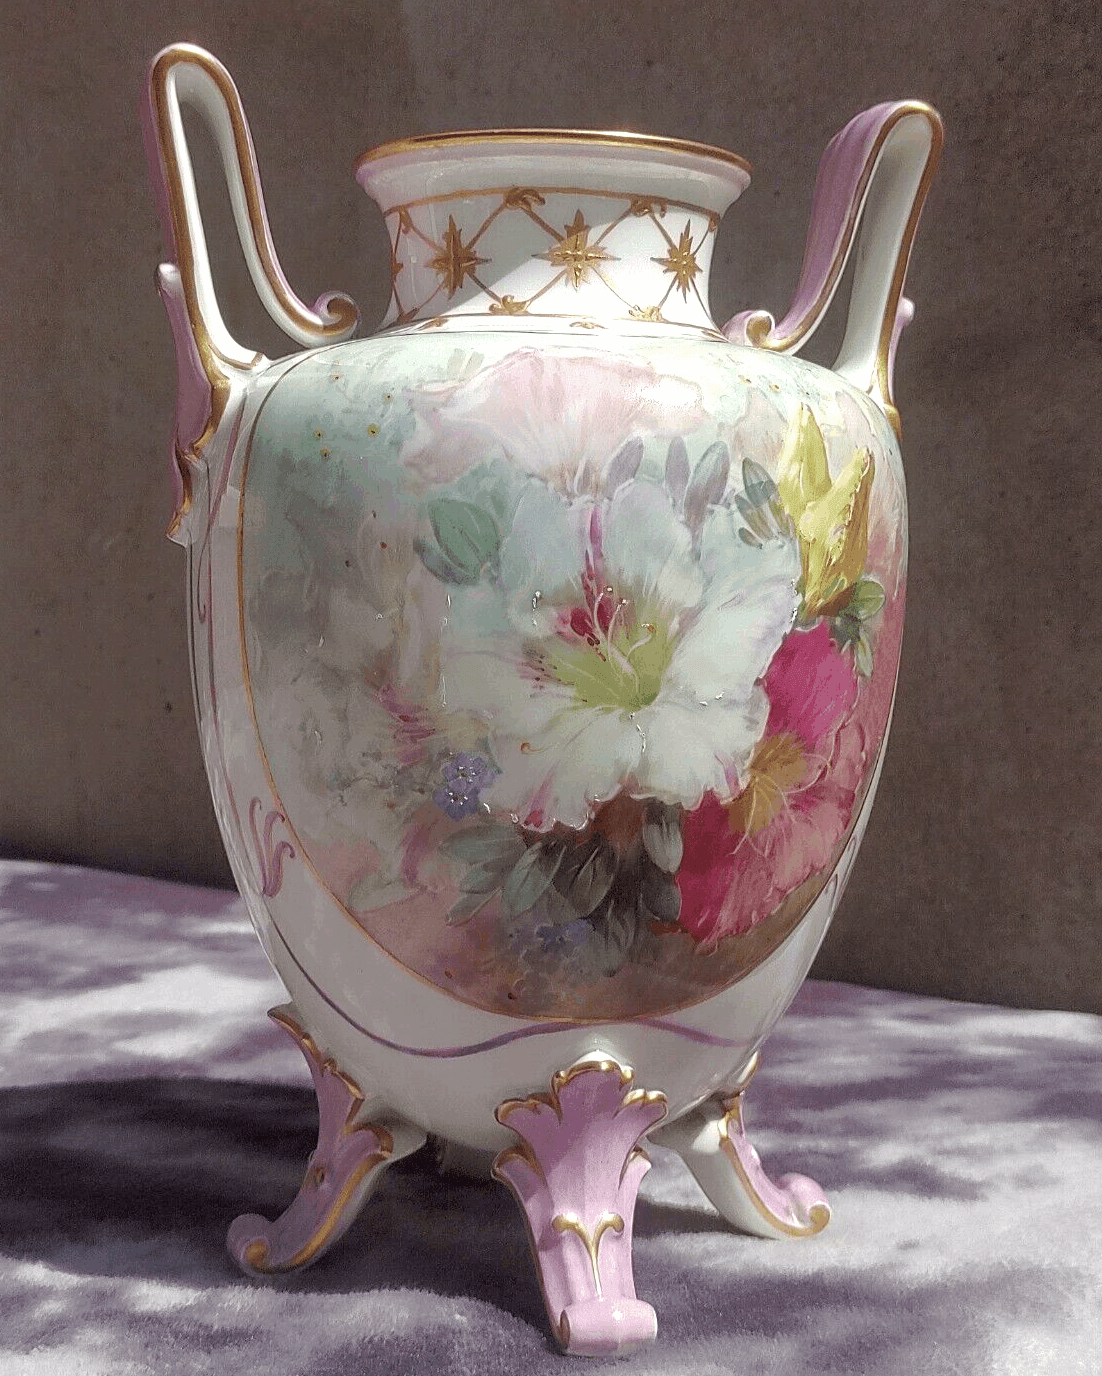 19th Century Antique Berlin KPM Porcelain Hand-painted Weichmalerei Vase - 25.5 cm